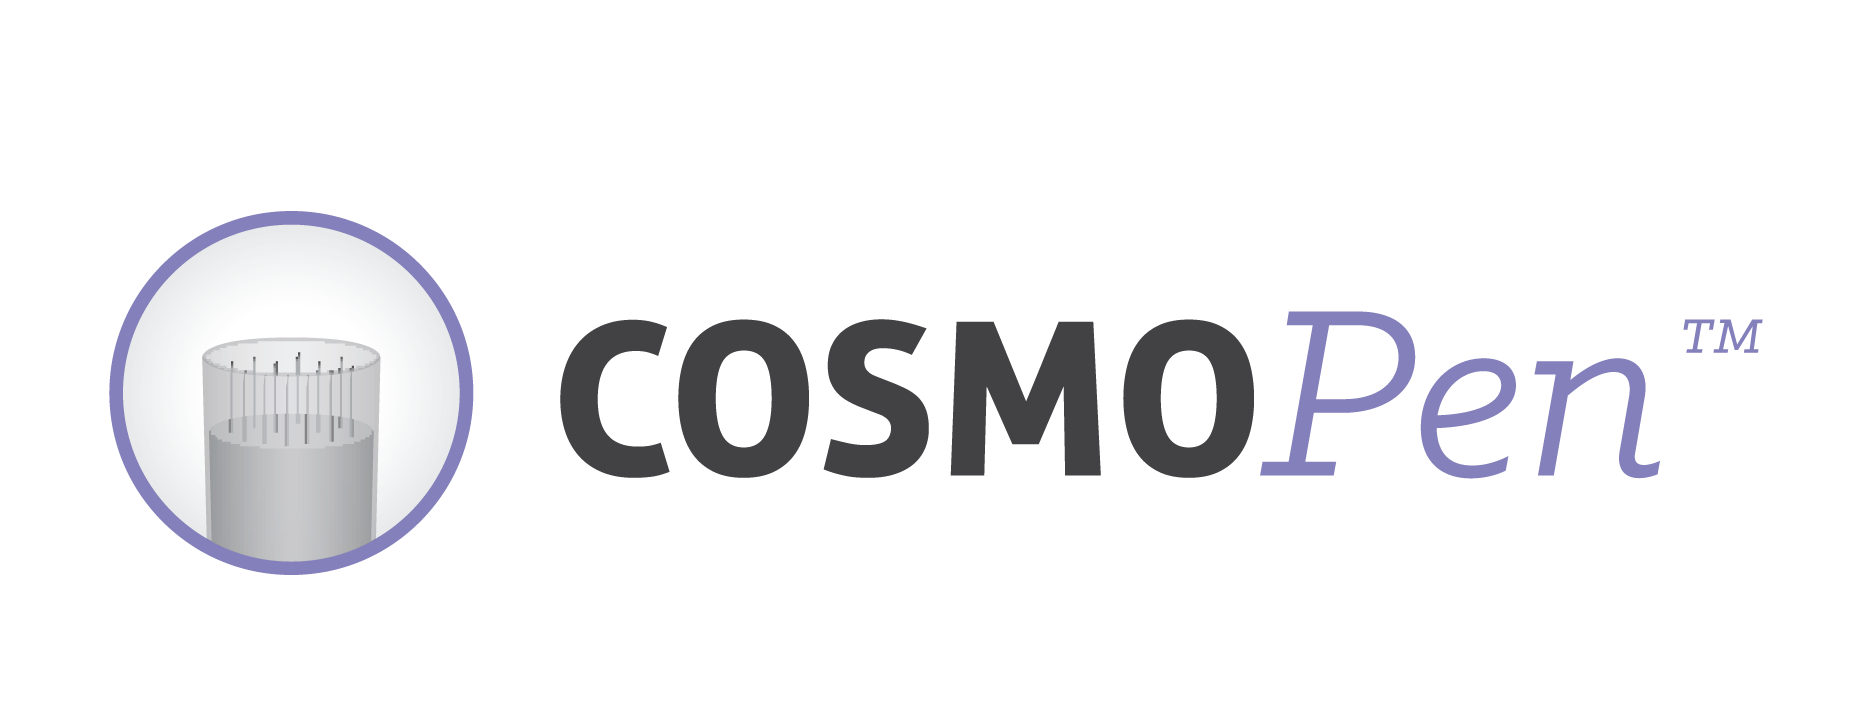 cosmopen-logo